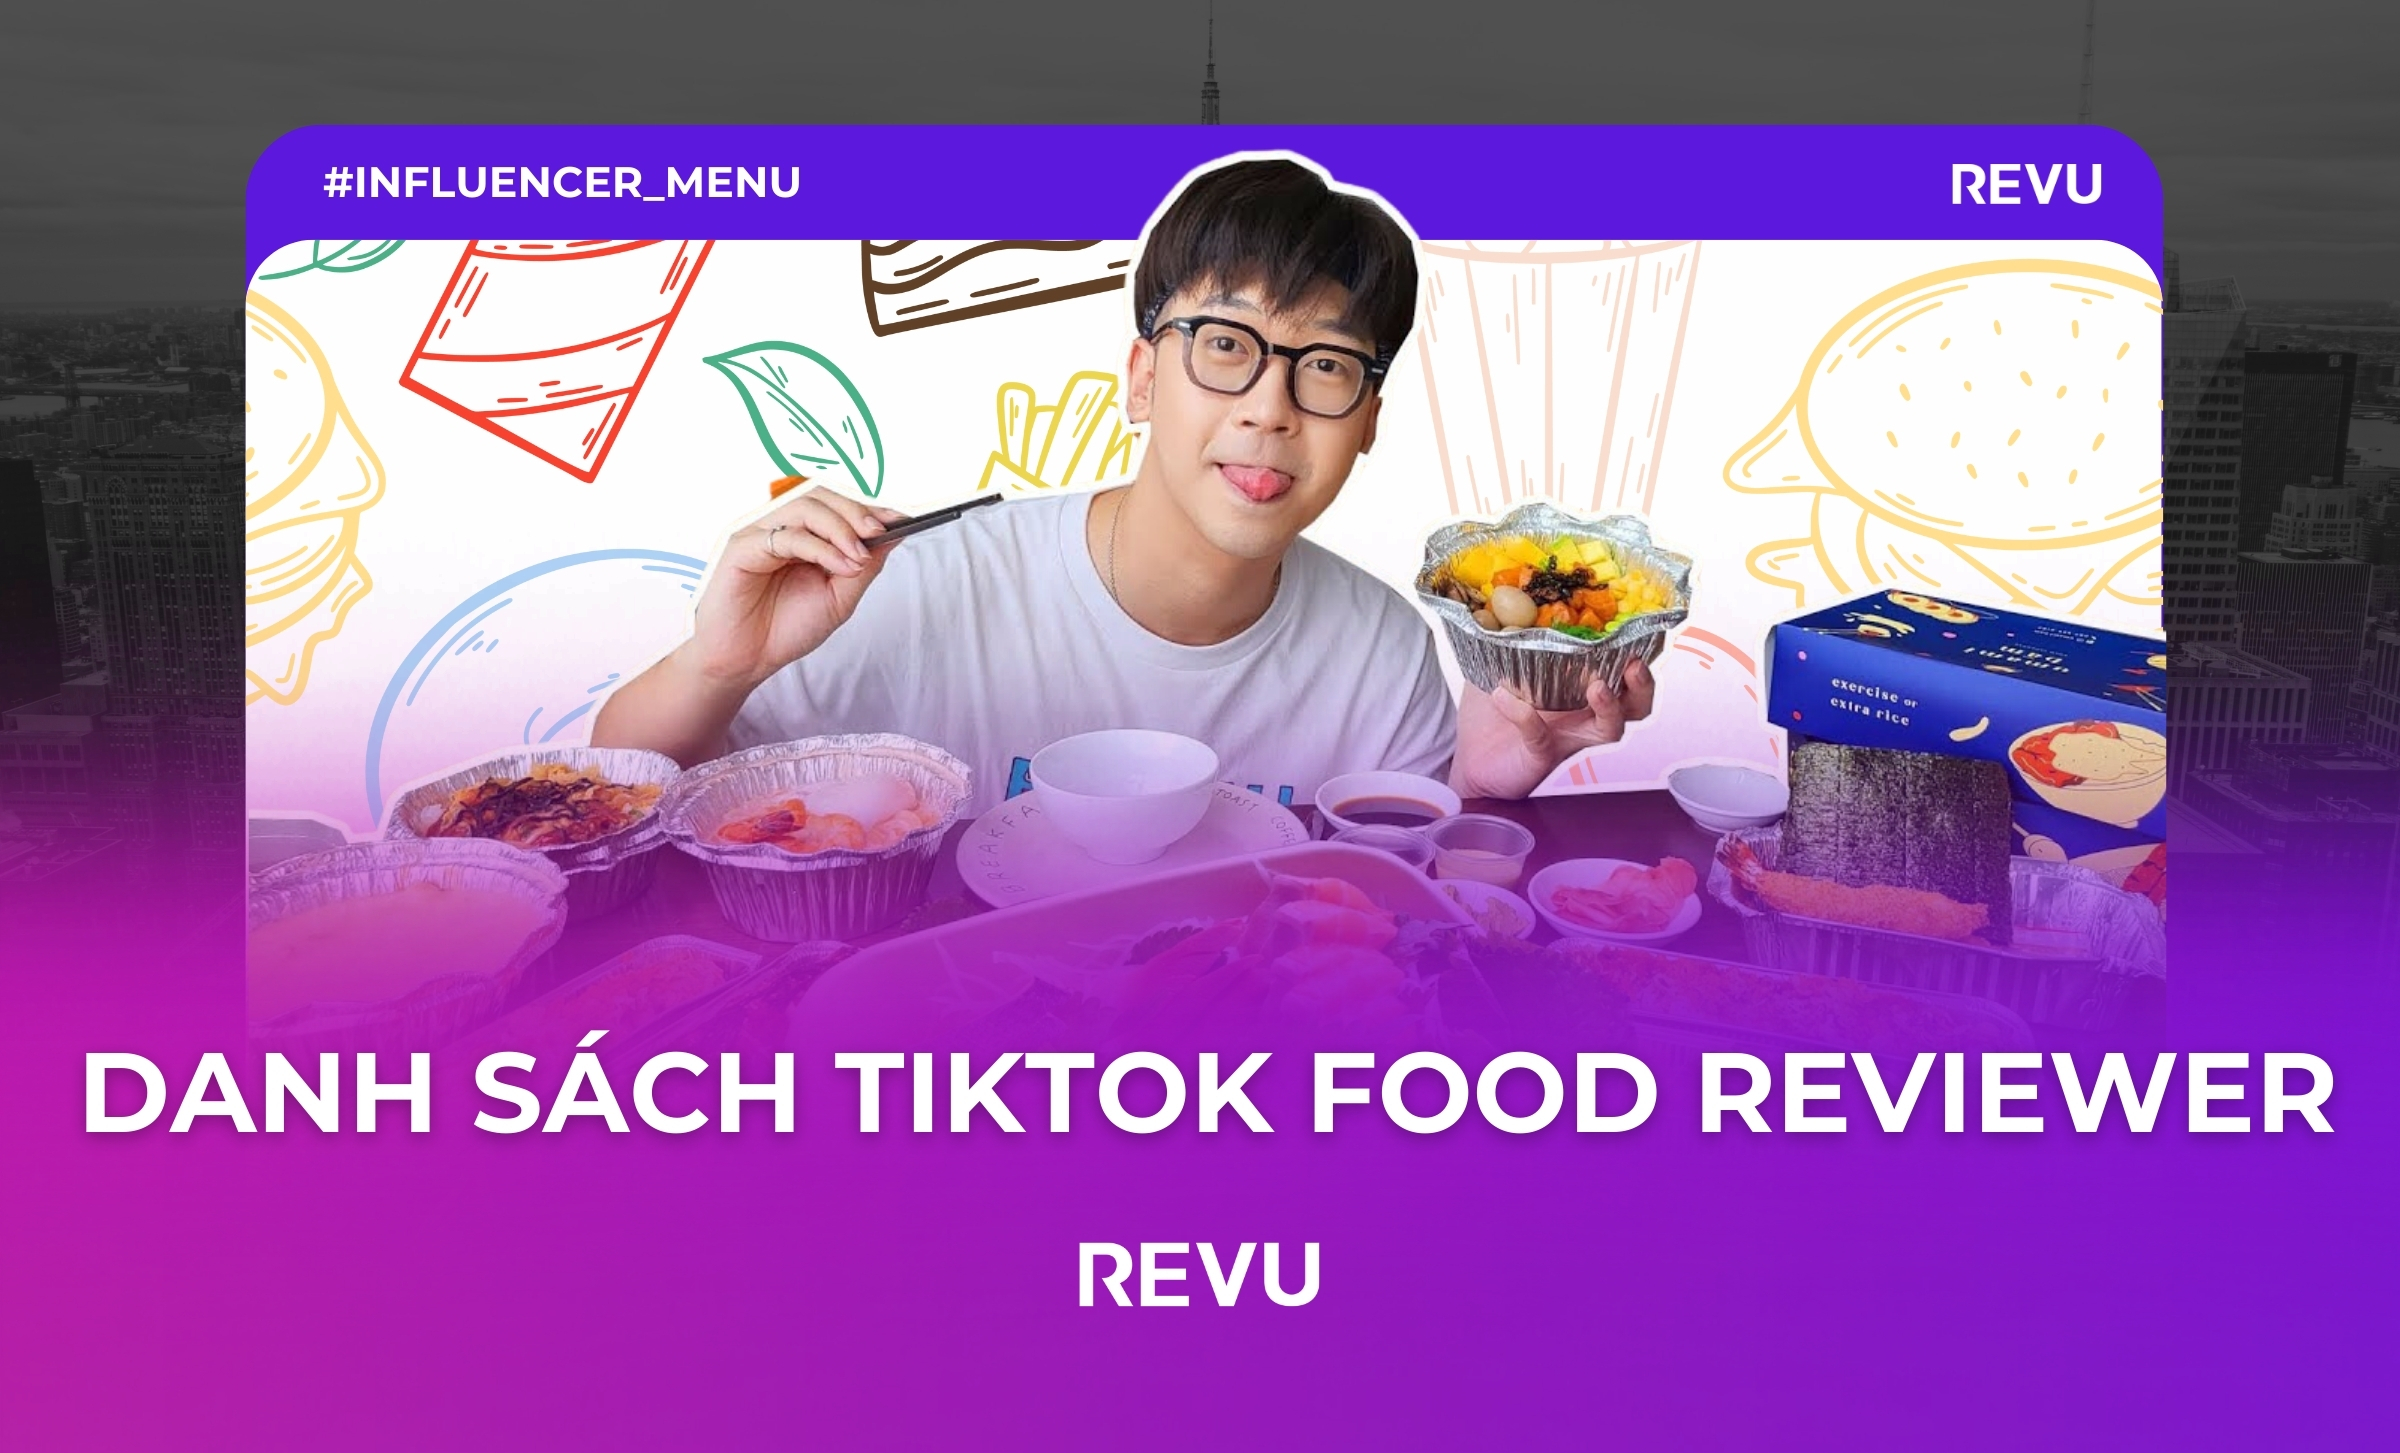 tiktok food reviewer influencer menu revu